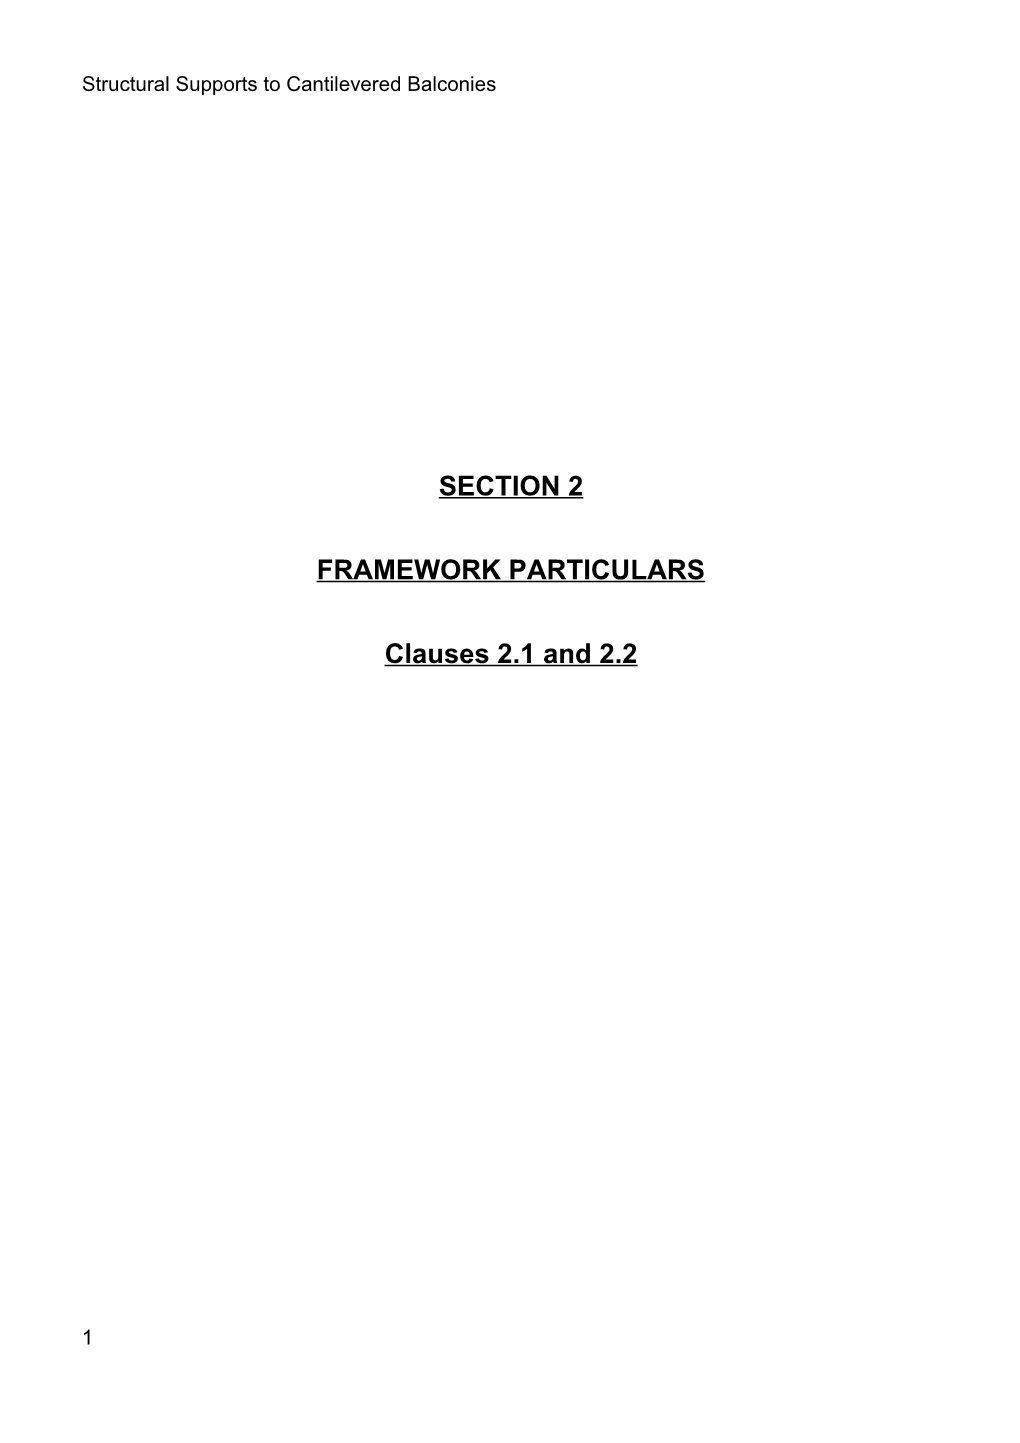 Section 2 - Framework Particulars